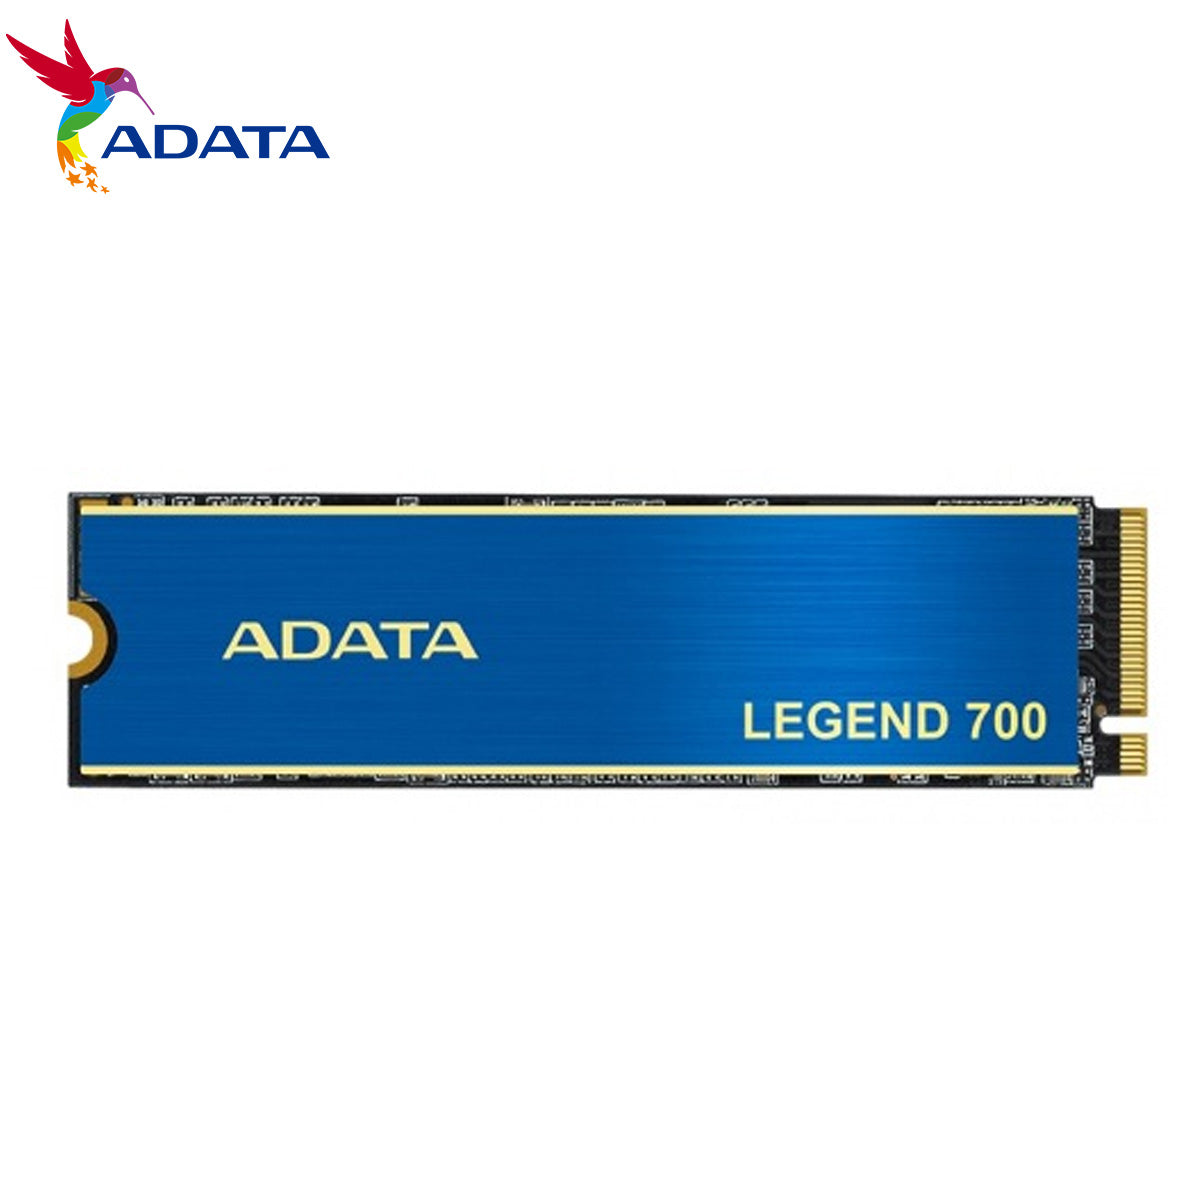 ADATA ALEG-700-256GCS Legend 700 256GB M.2 PCIe 3.0 x4